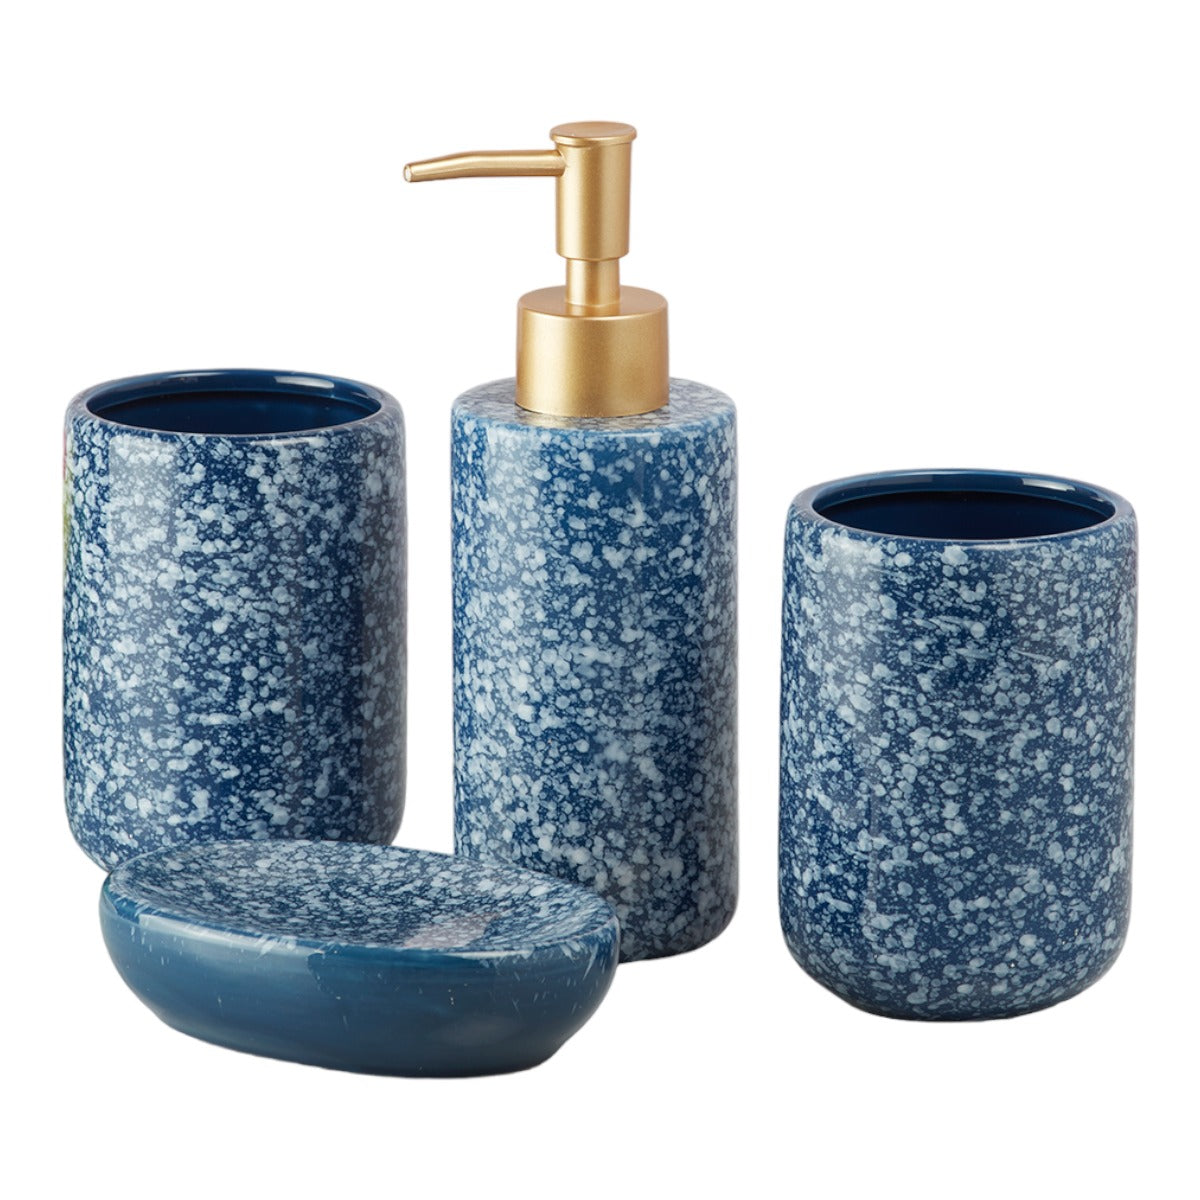 Ceramic Bathroom Accessories Set of 4 Bath Set with Soap Dispenser (9632)